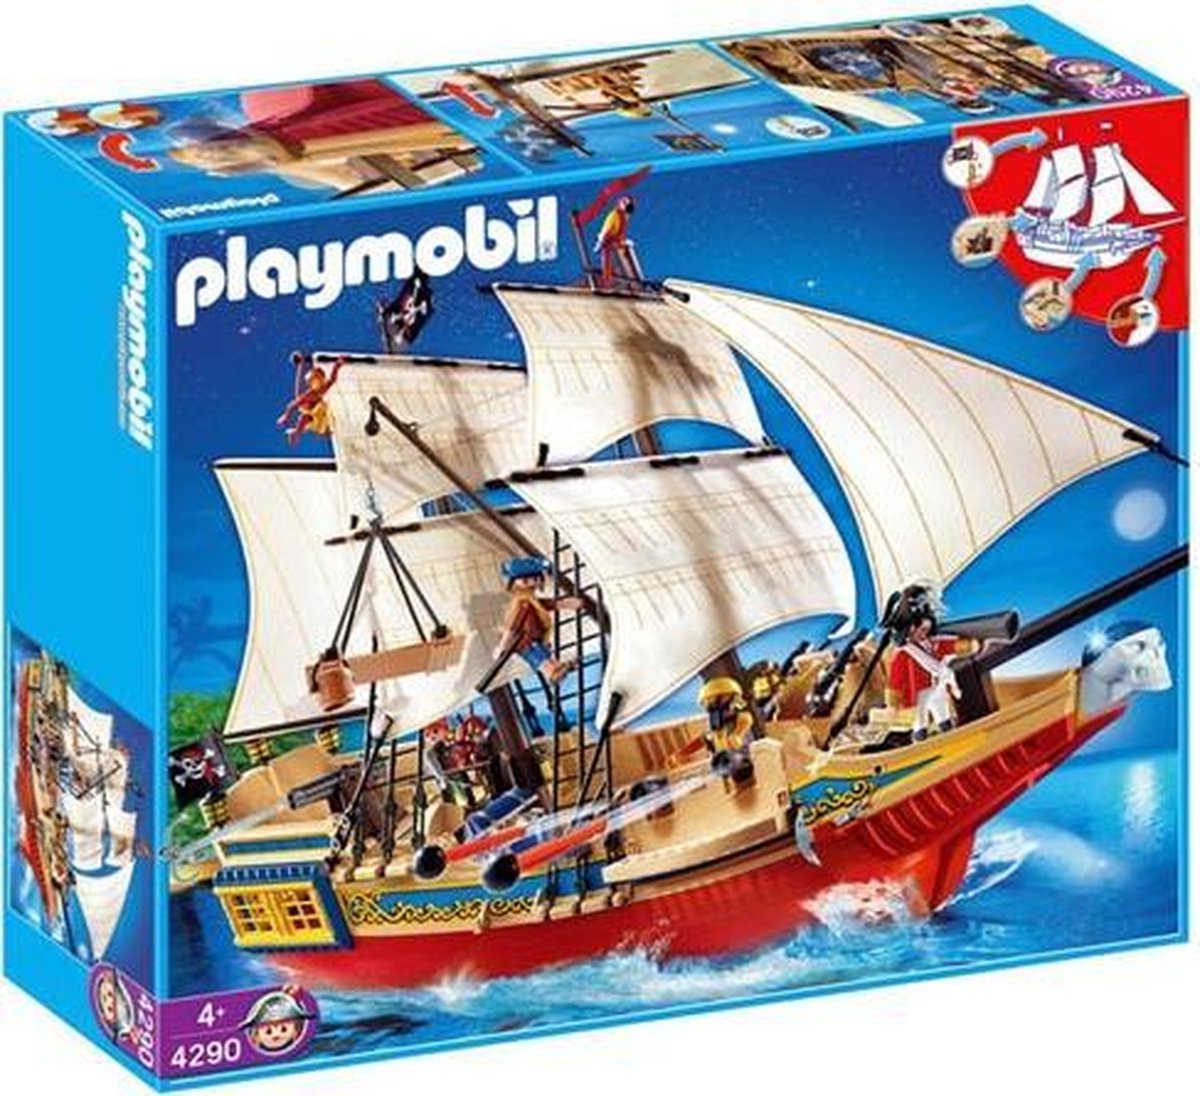 Playmobil Piratenschip Groot - 4290 | bol.com